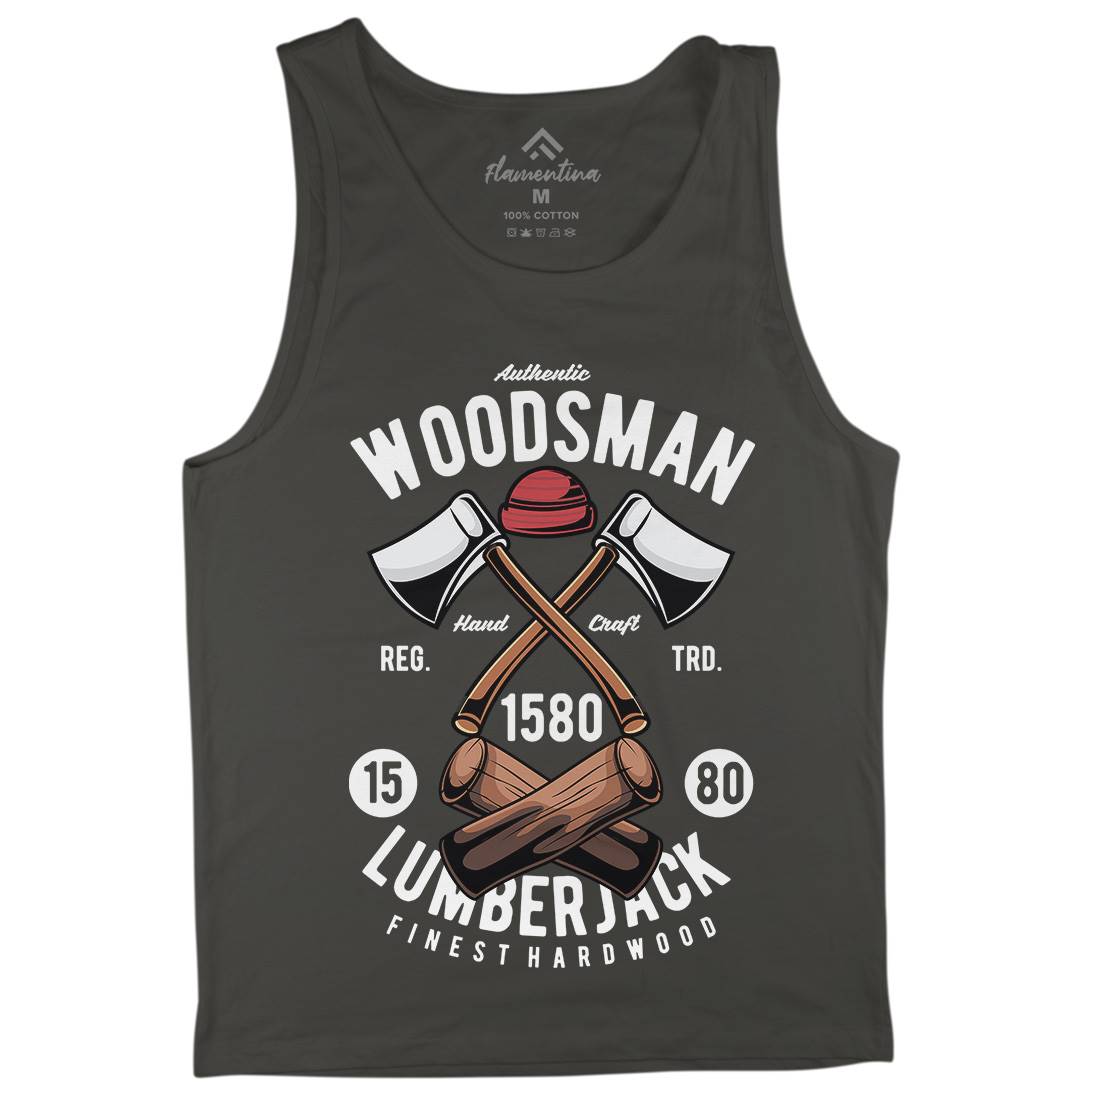 Woodsman Mens Tank Top Vest Work C474